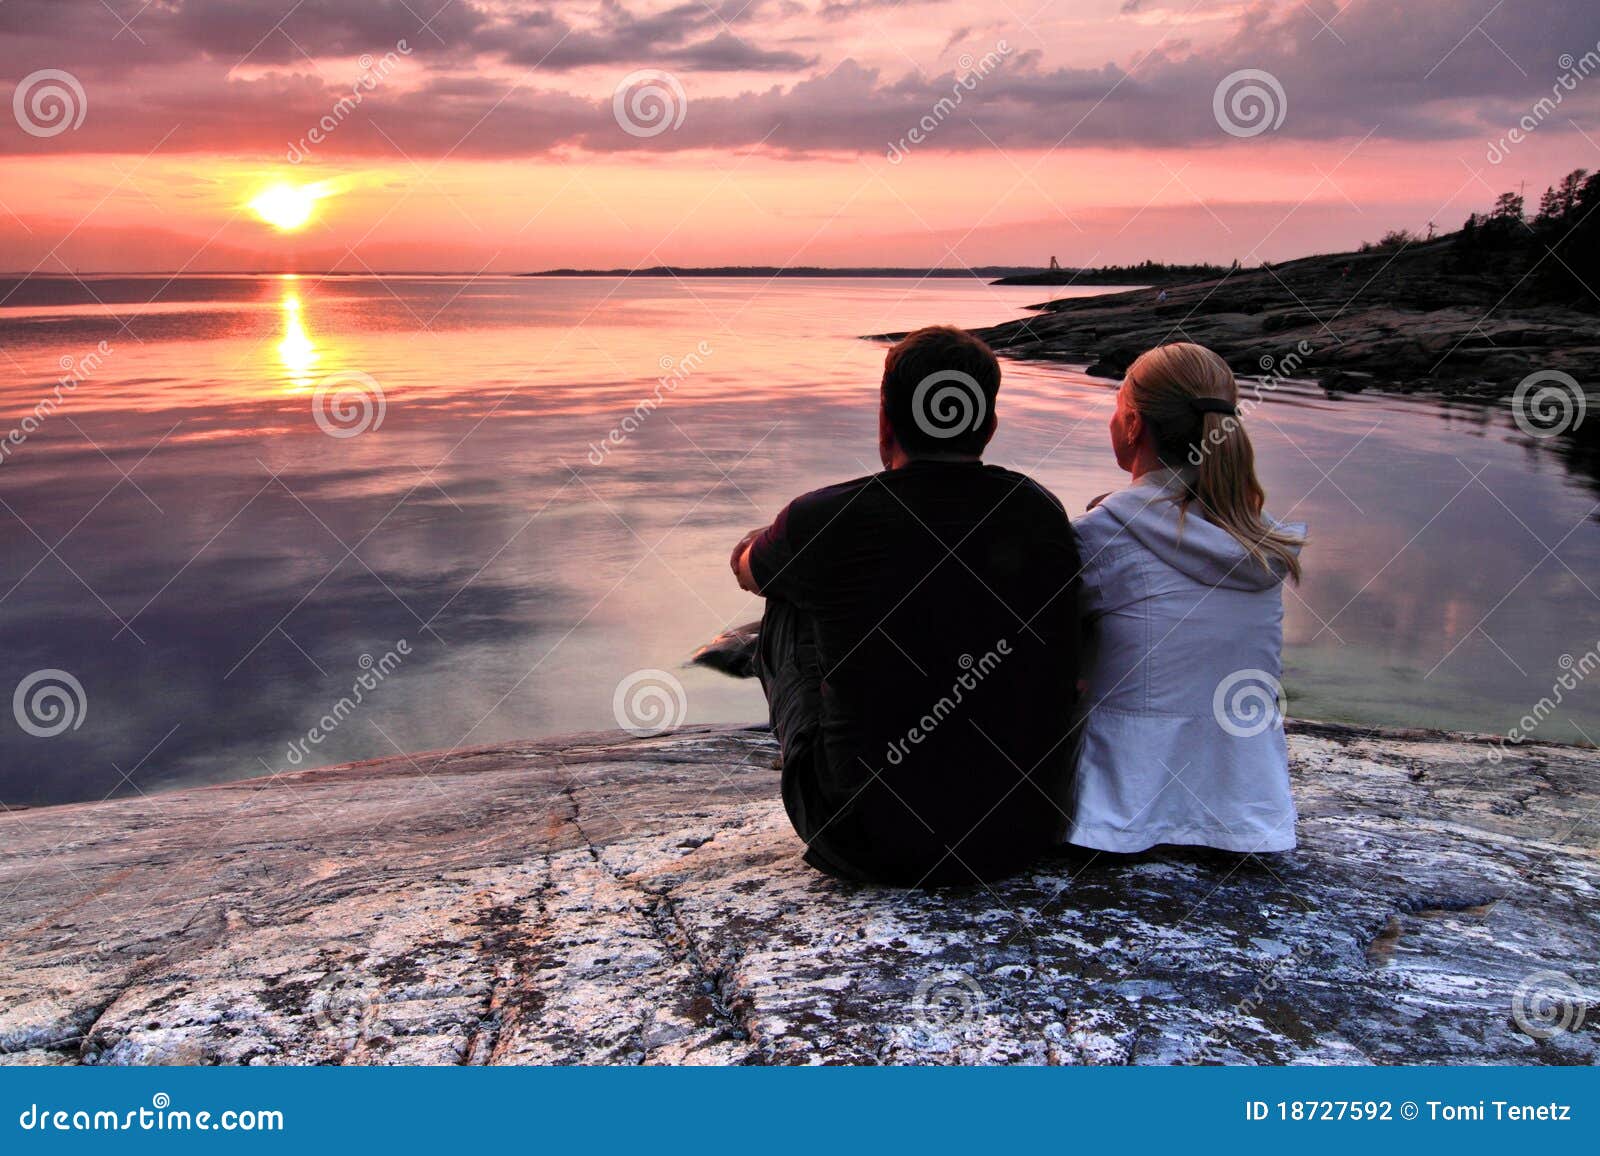 finland: sunset by gulf of finland